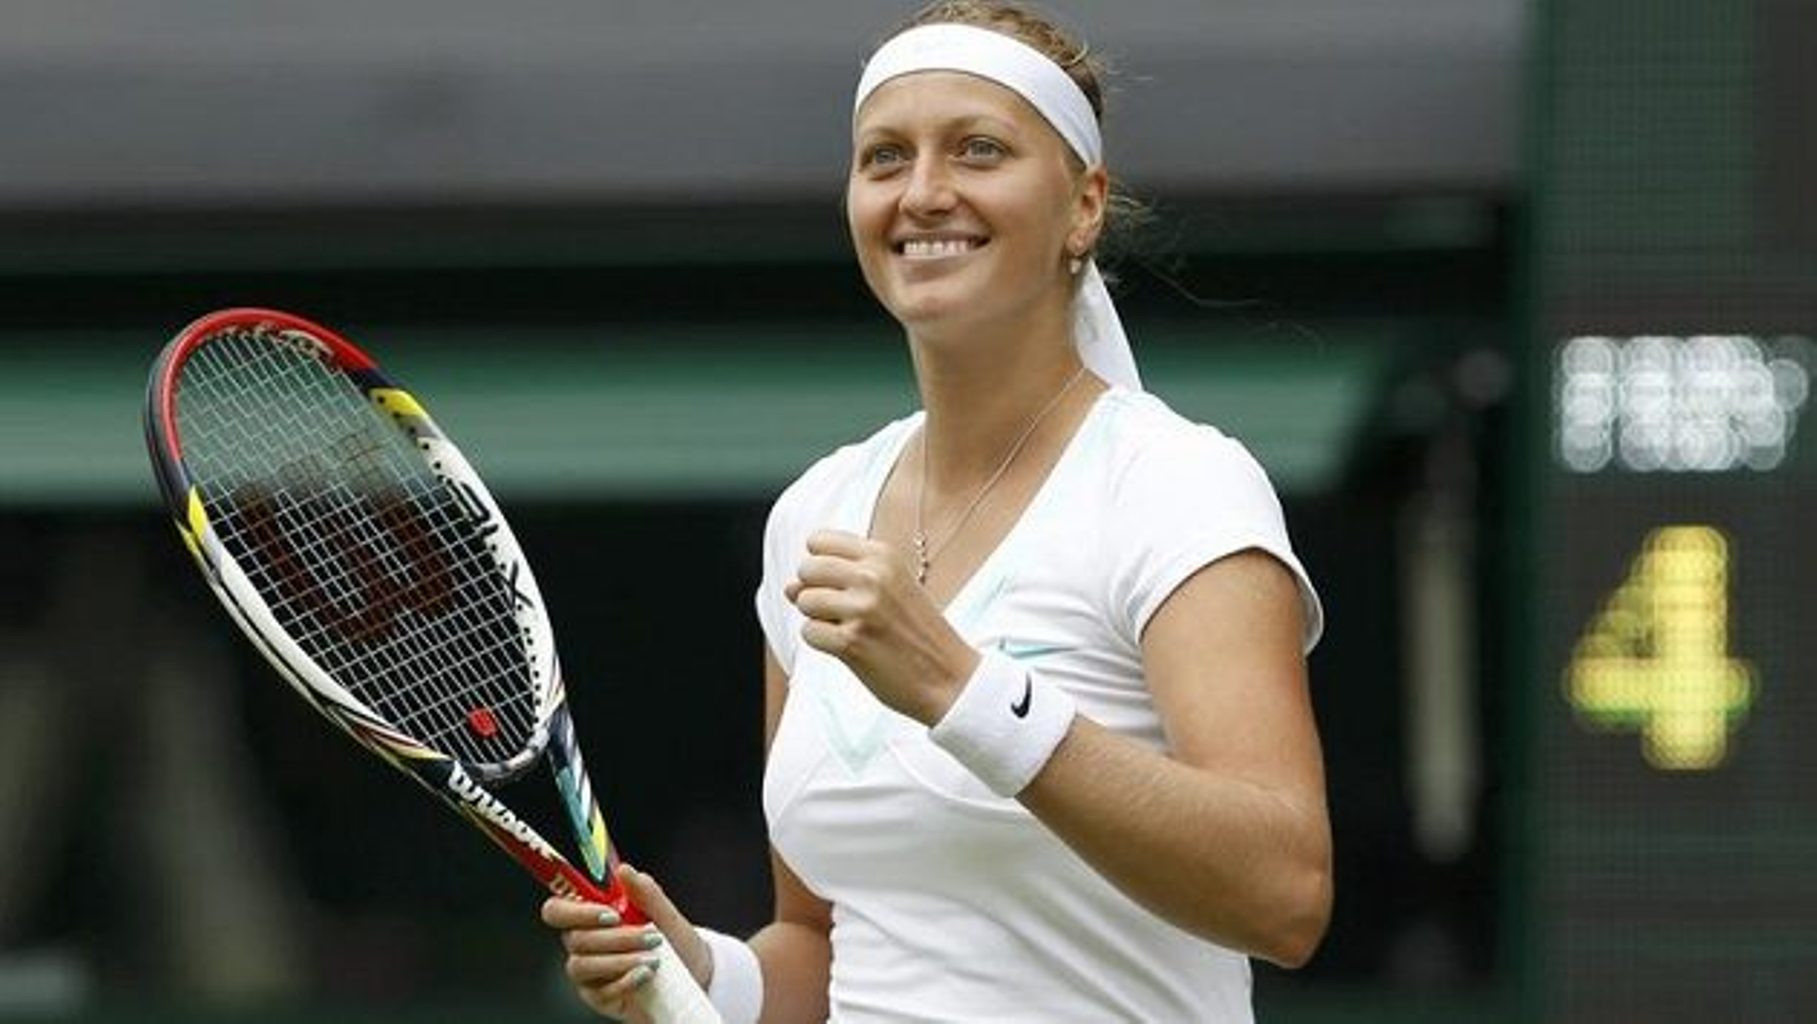 Petra Kvitova Wimbledon 2012.. - Tennis Photo (31258603) - Fanpop1817 x 1024